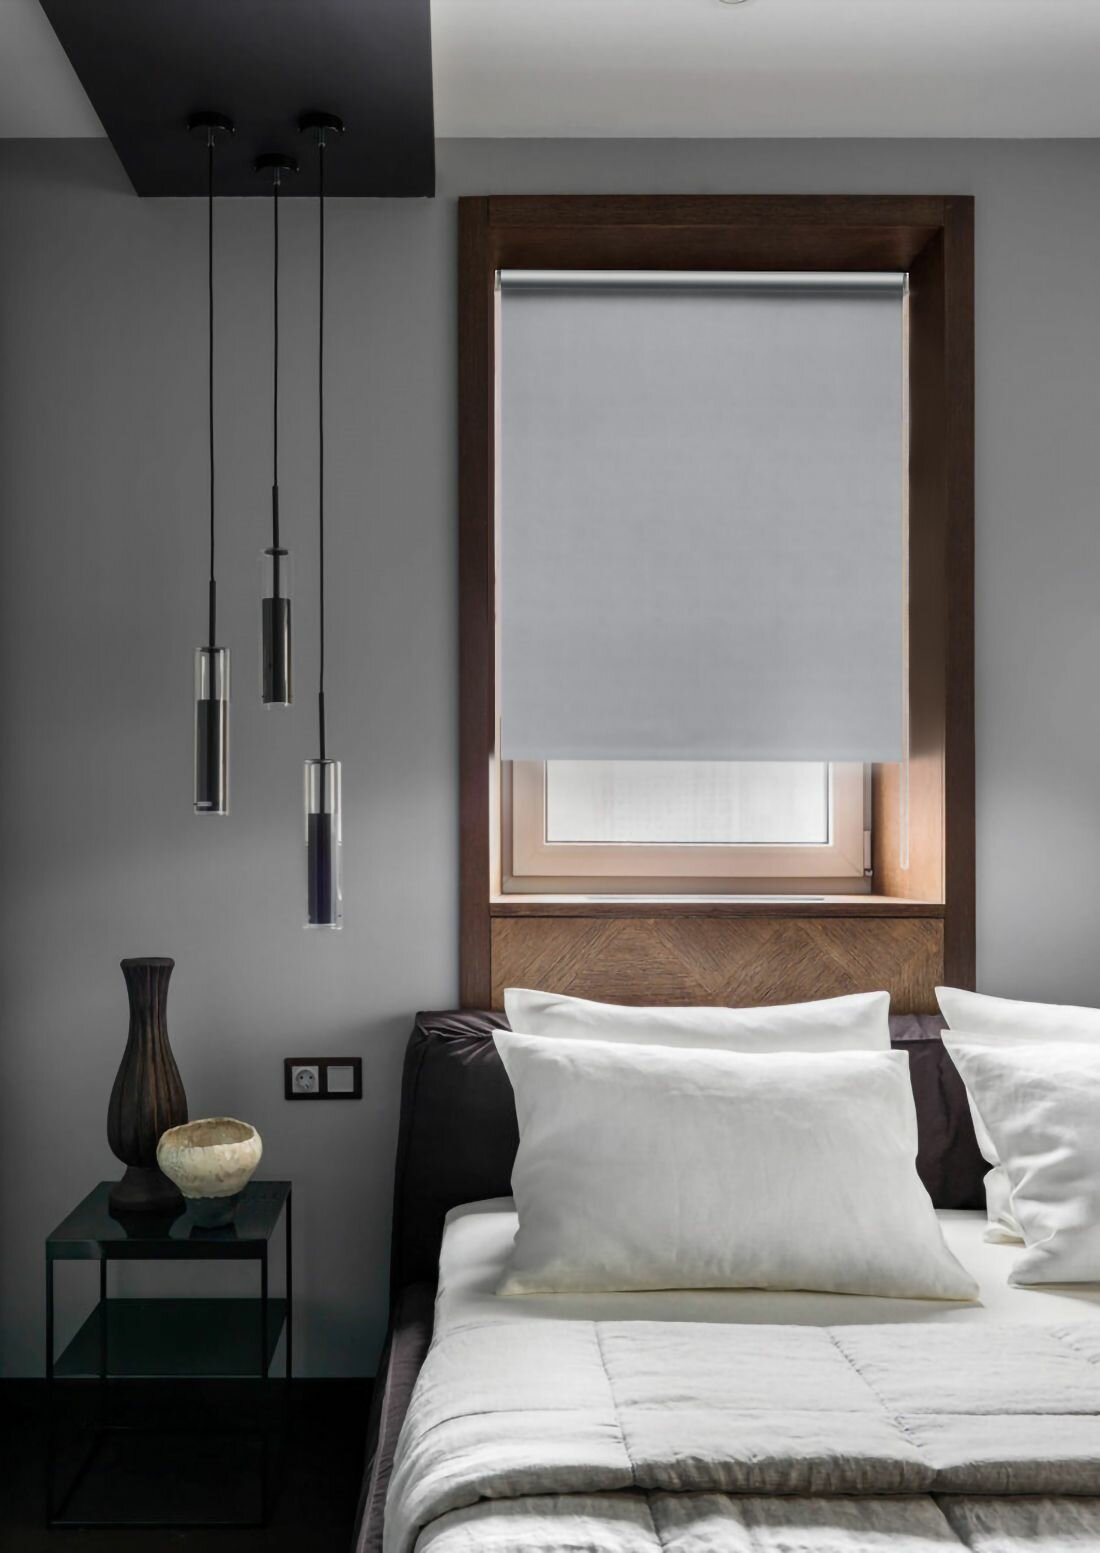 Рулонные шторы Эскар Blackout отражающий серый 60x170 см